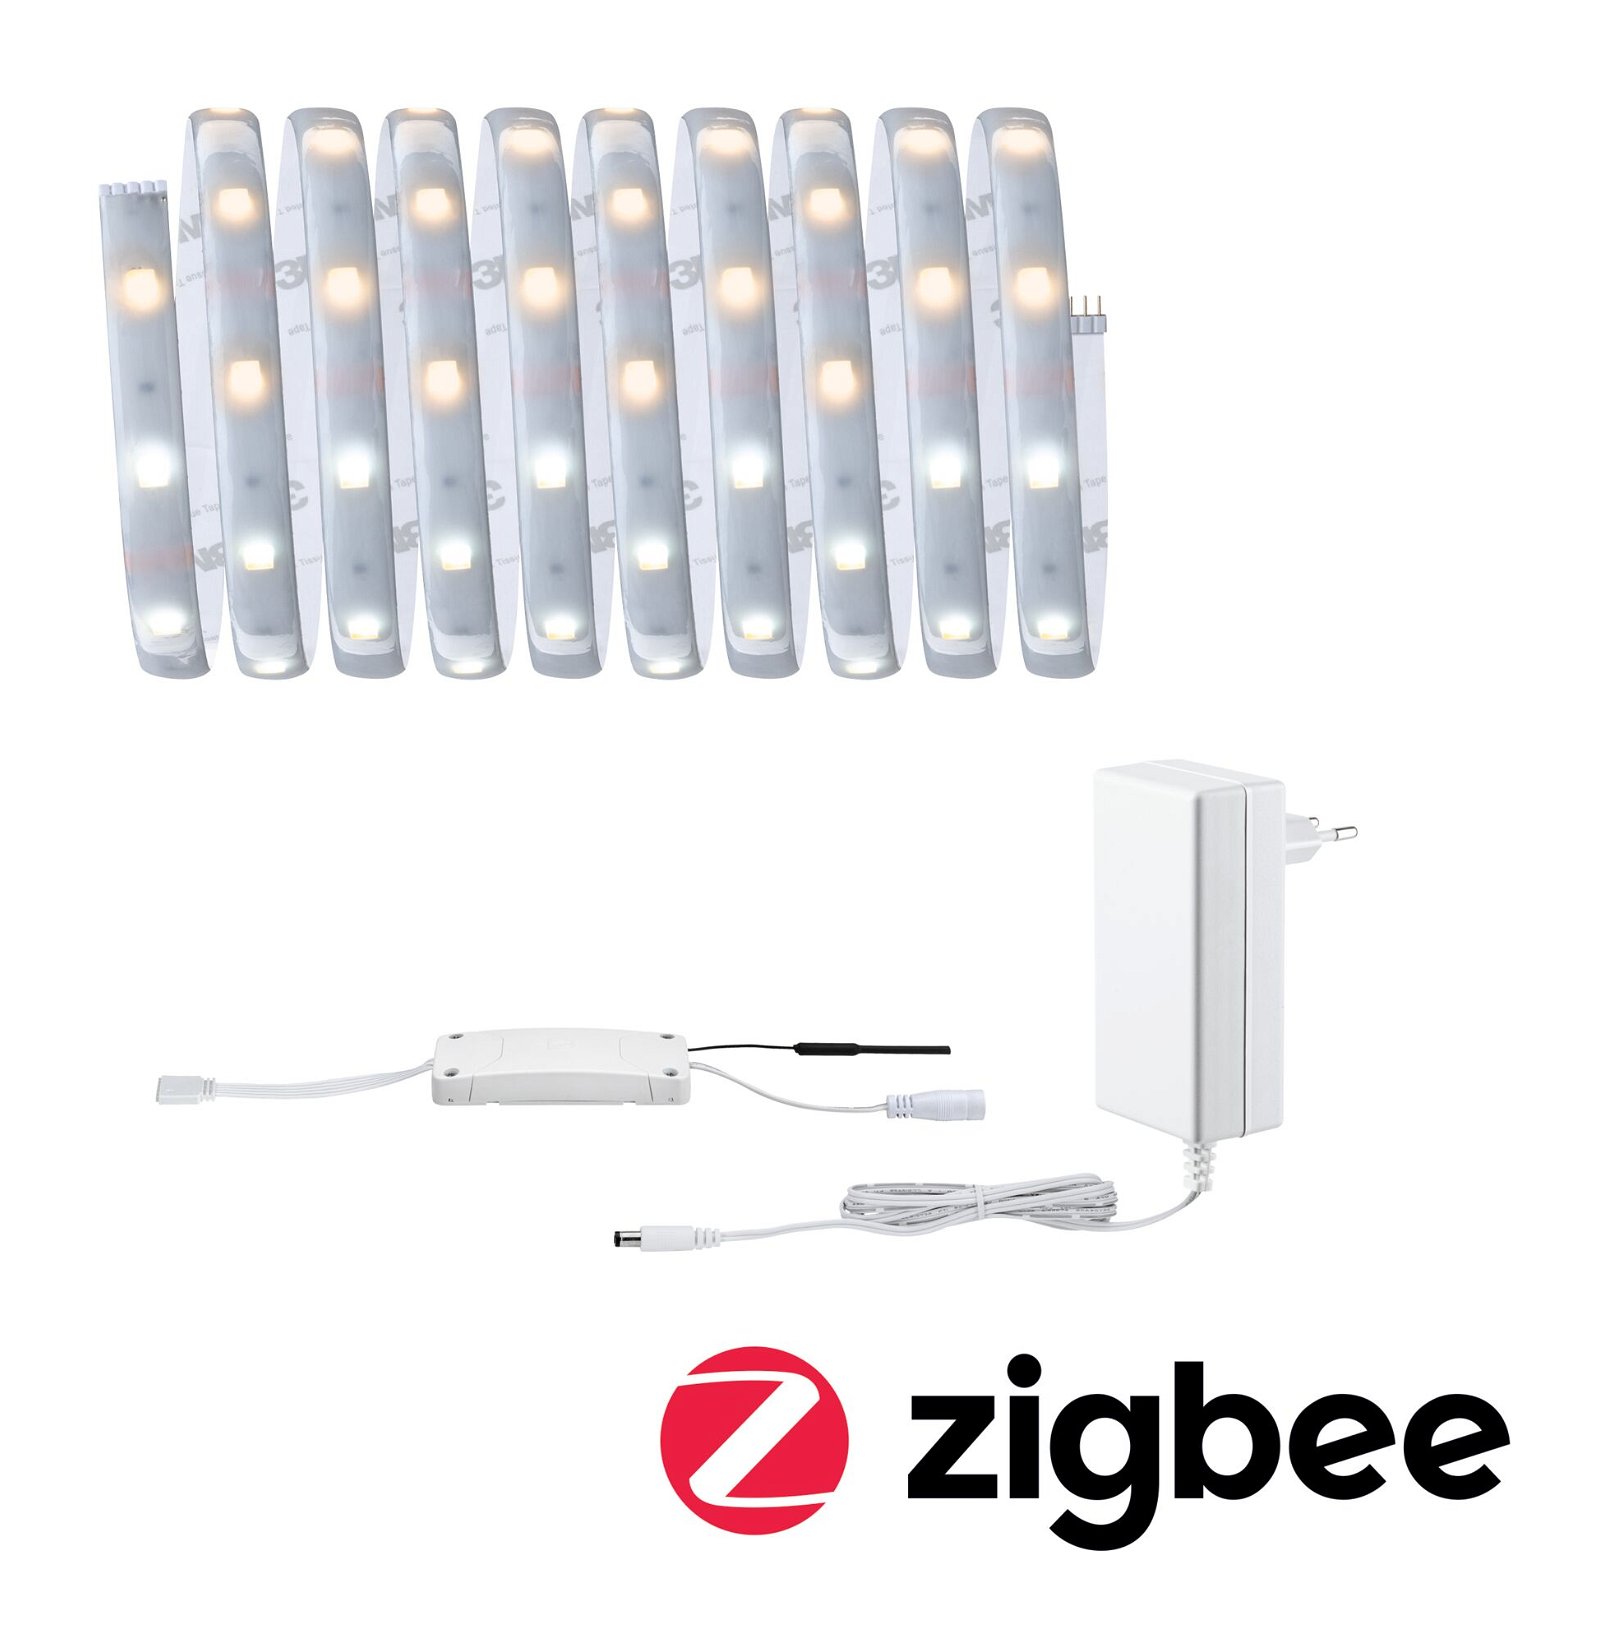 PAULMANN MaxLED 250 LED pásek Smart Home Zigbee měnitelná bílá s krytím základní sada 3m IP44 12W 30LEDs/m měnitelná bílá 36VA